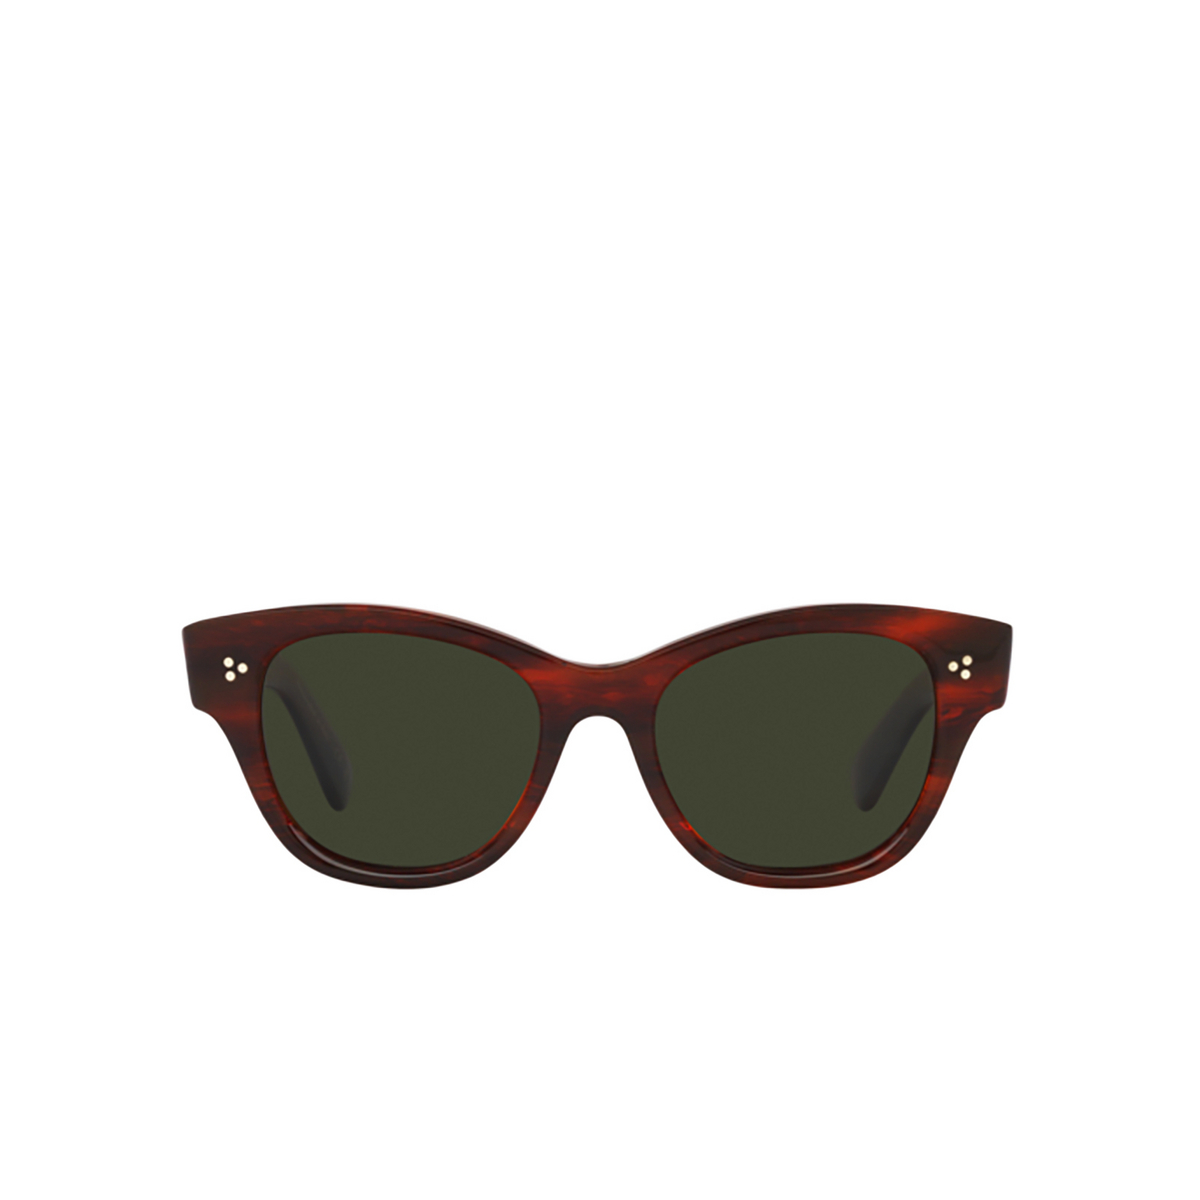 Oliver Peoples EADIE Sunglasses 1725P1 Vintage Red Tortoise - front view